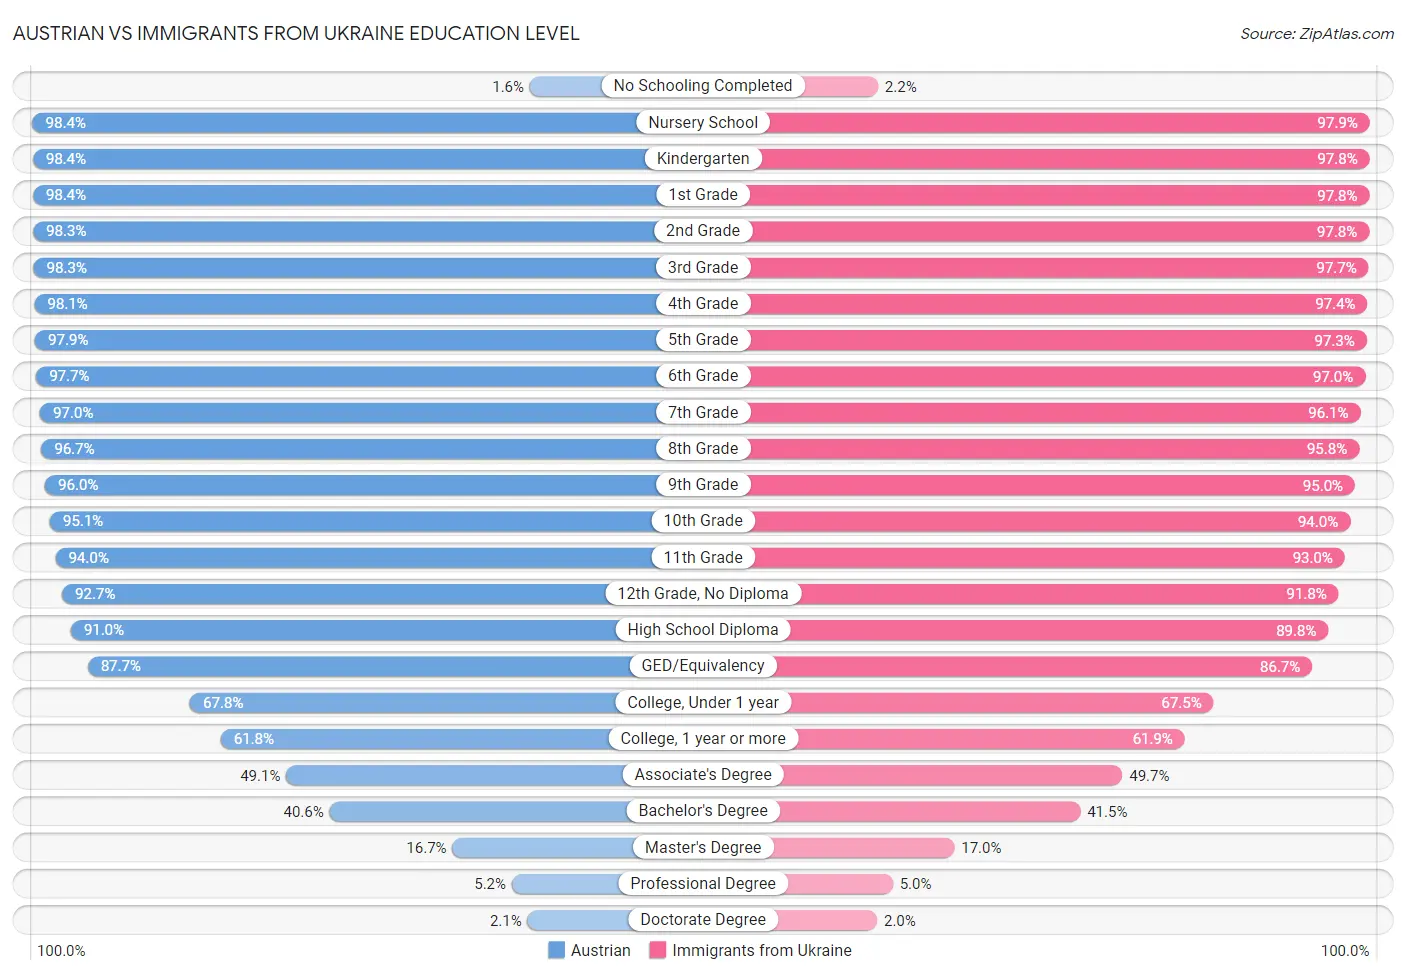 Austrian vs Immigrants from Ukraine Education Level